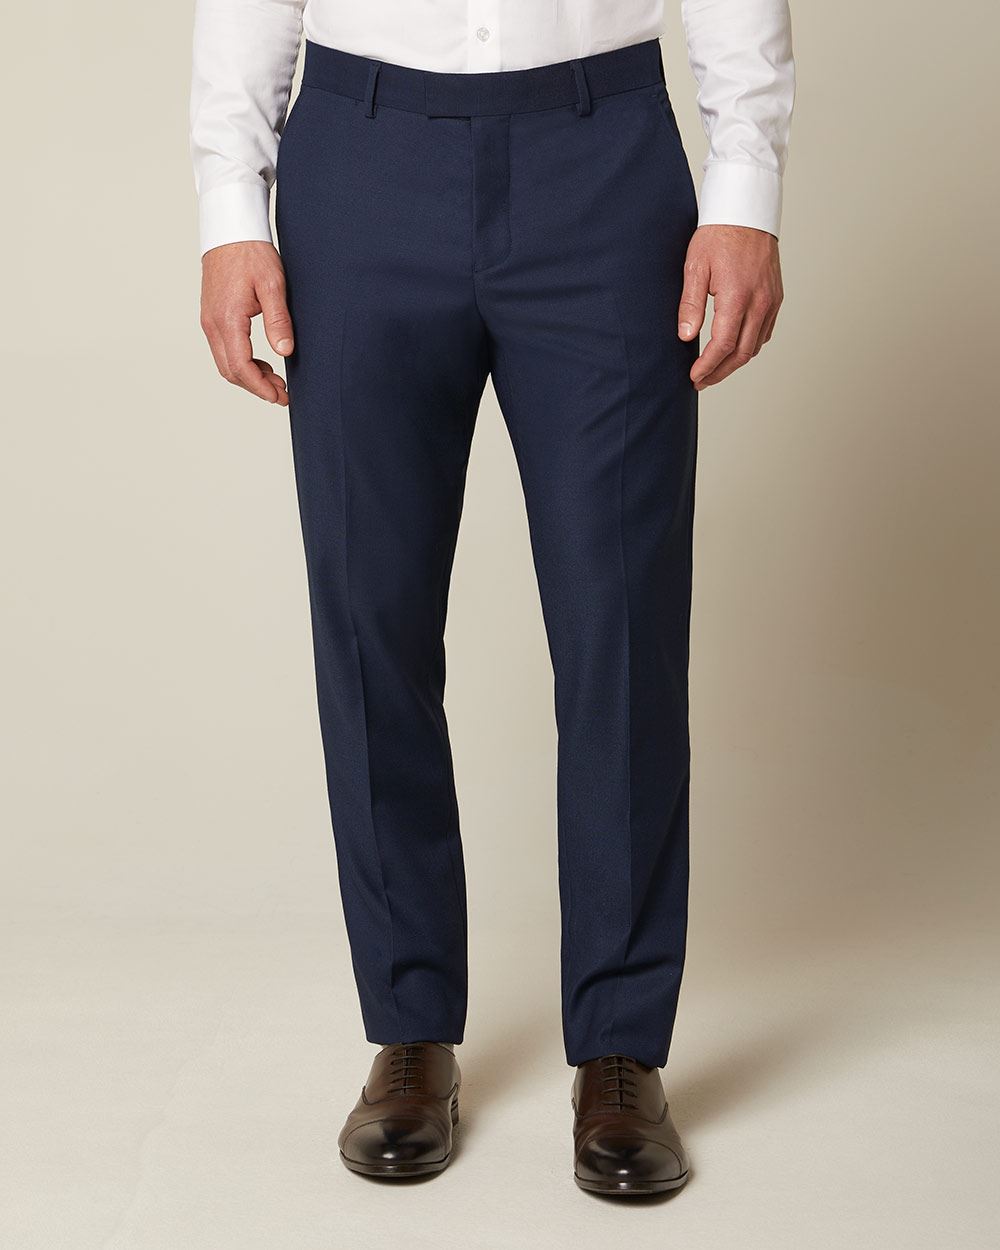 Essential Navy Suit Pant | RW&CO.